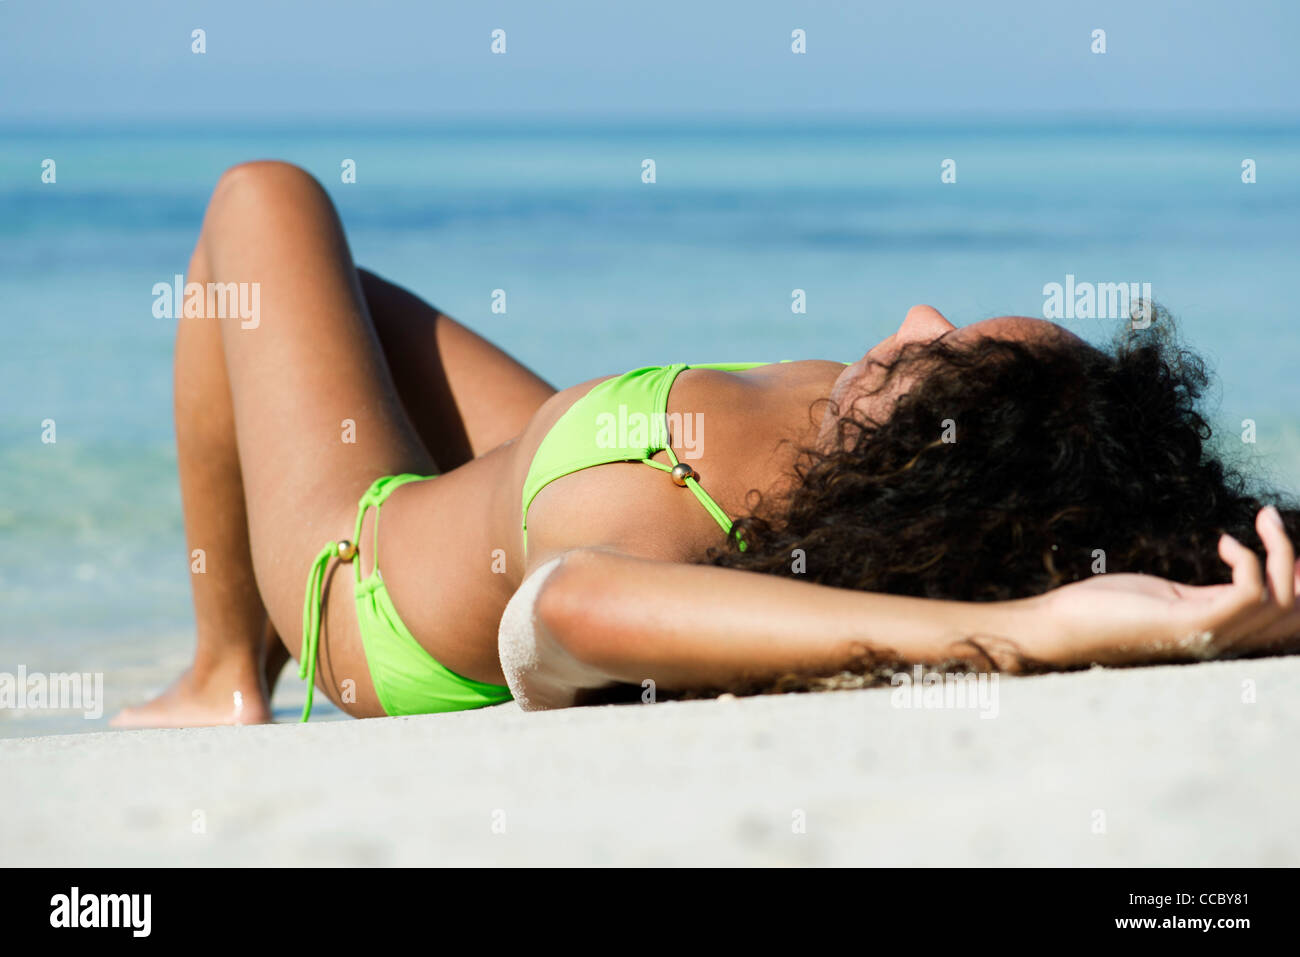 Woman in bikini sunbathing on beach Stock Photo pic photo